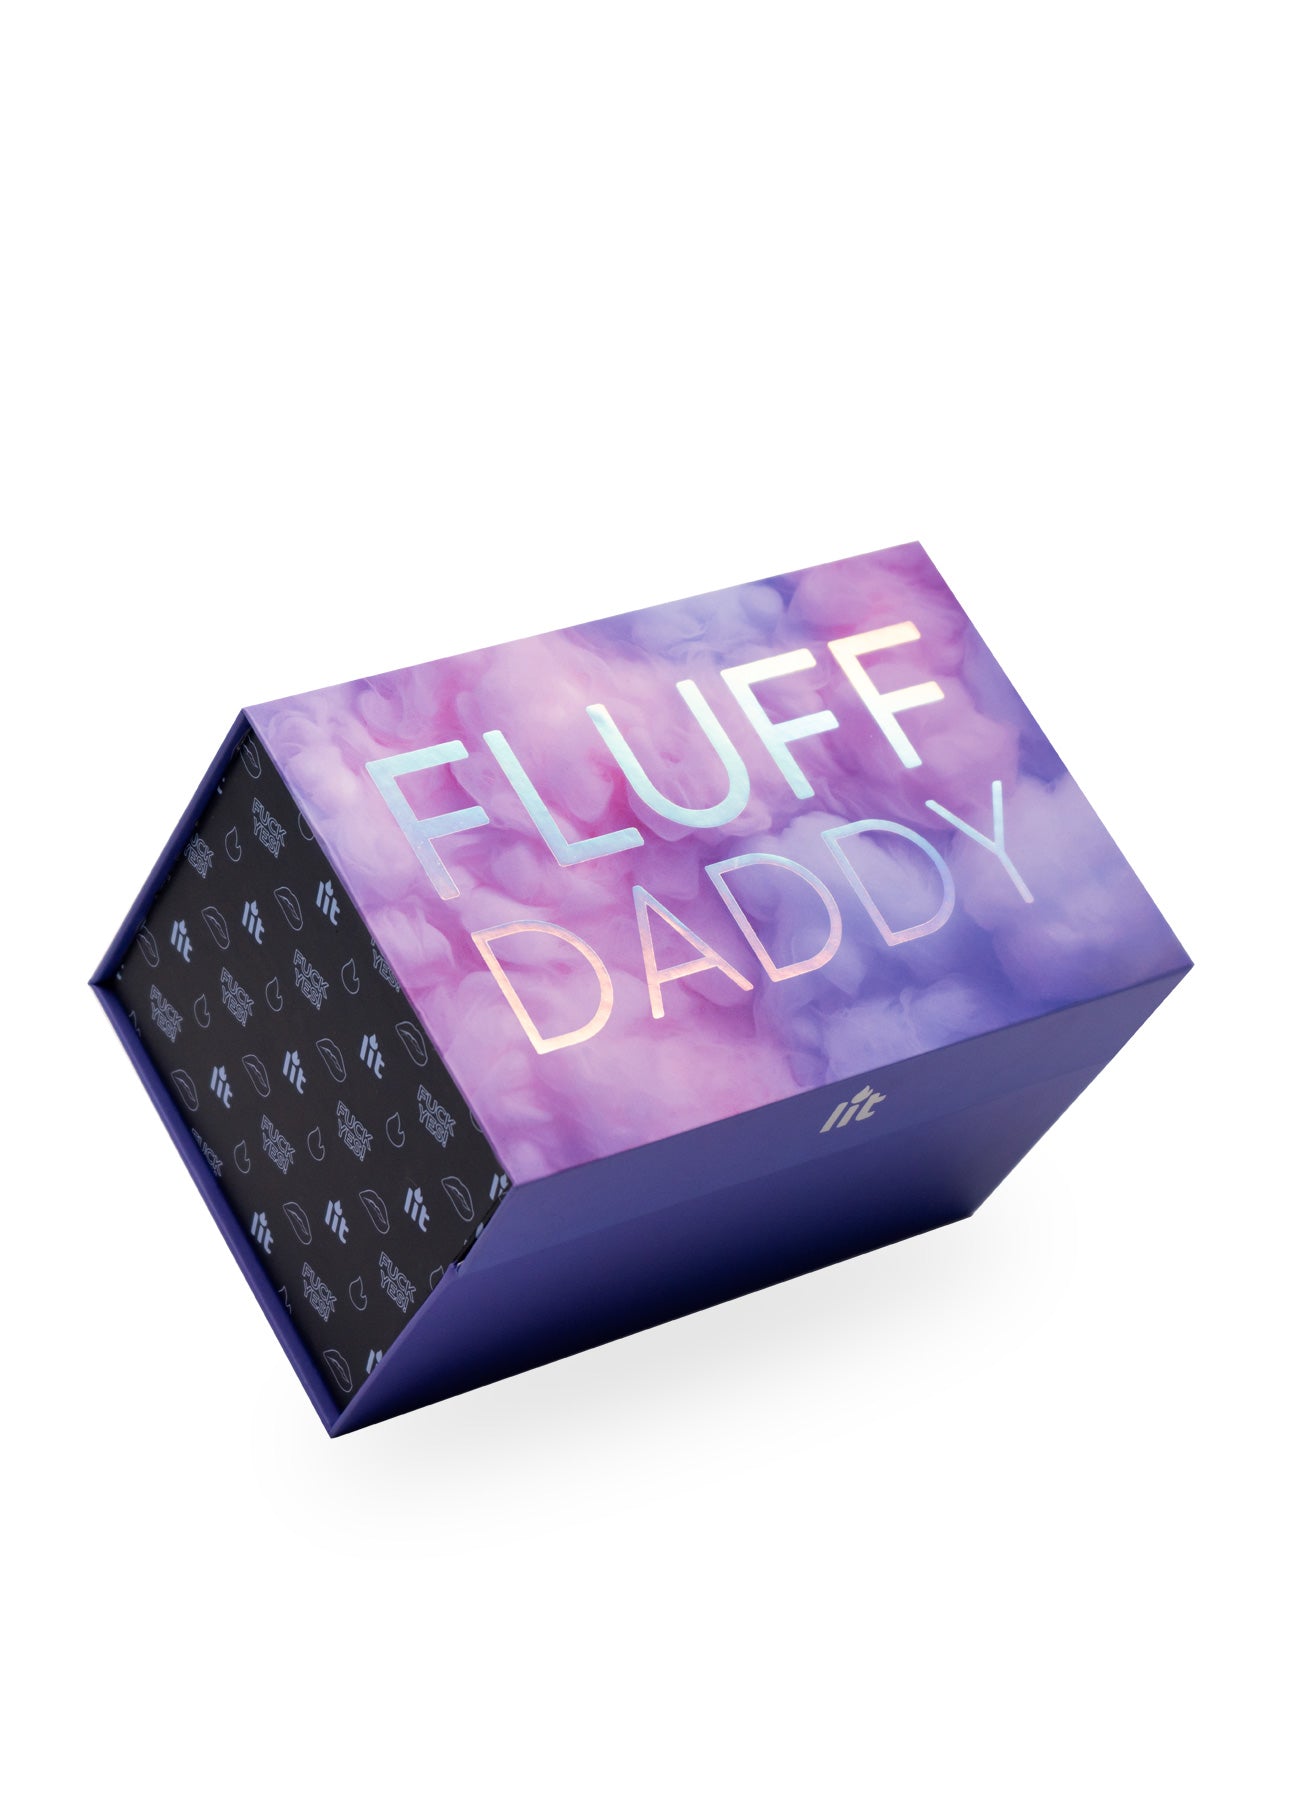 Fluff Daddy (Sensation Tool)